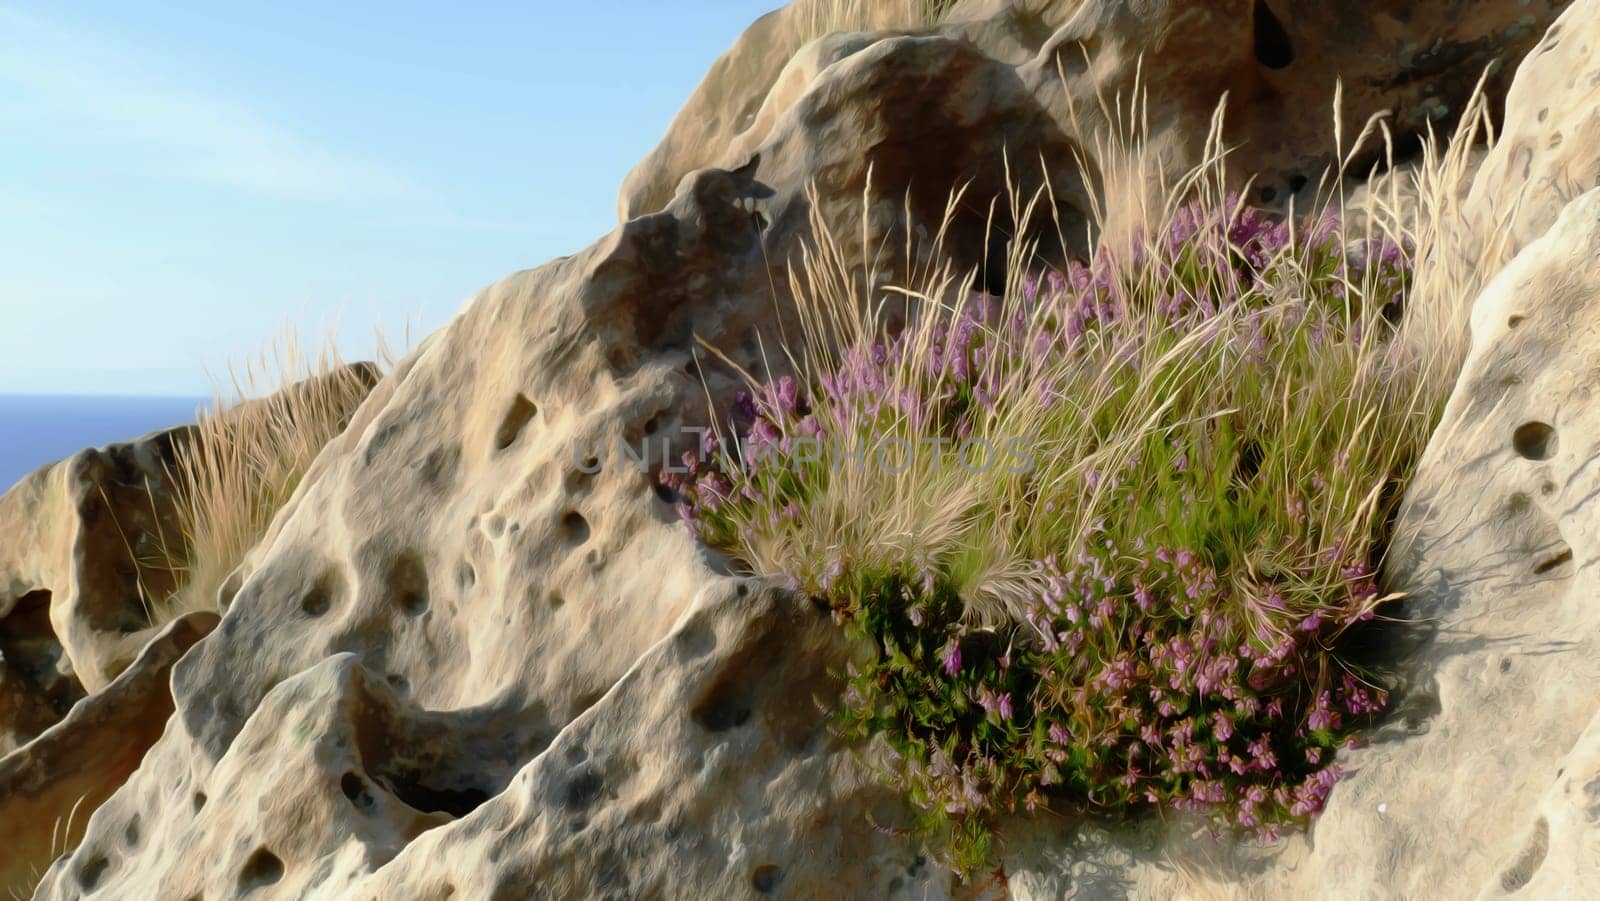 Painting rocks with plants on the sea coast.